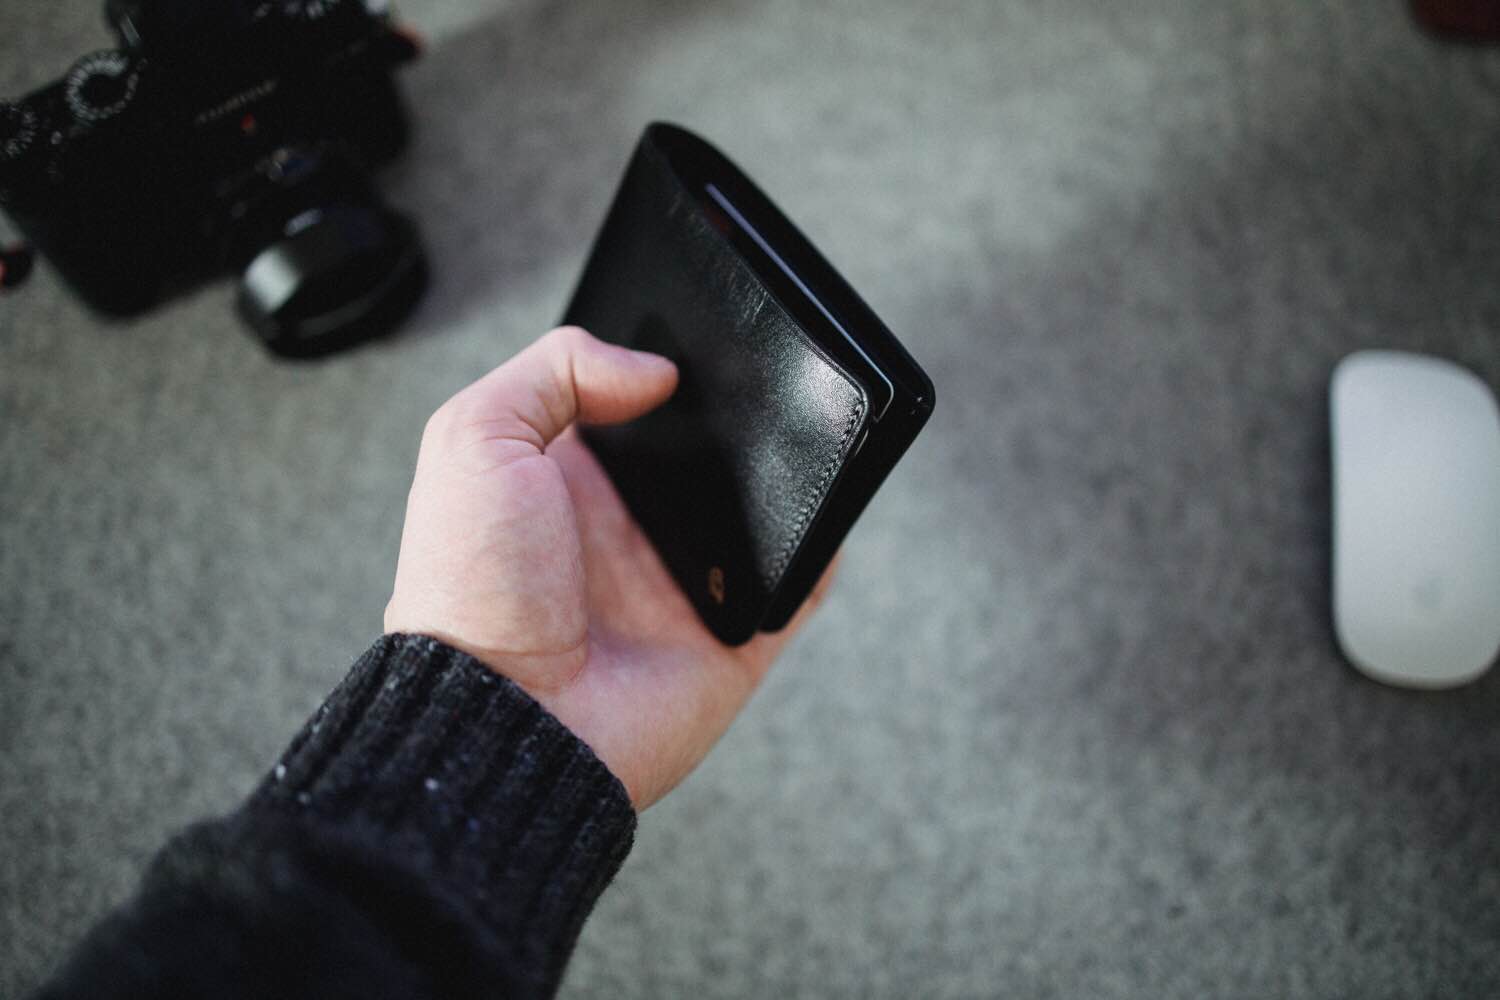  Bellroy Hide & Seek Wallet (Slim Leather Bifold Design